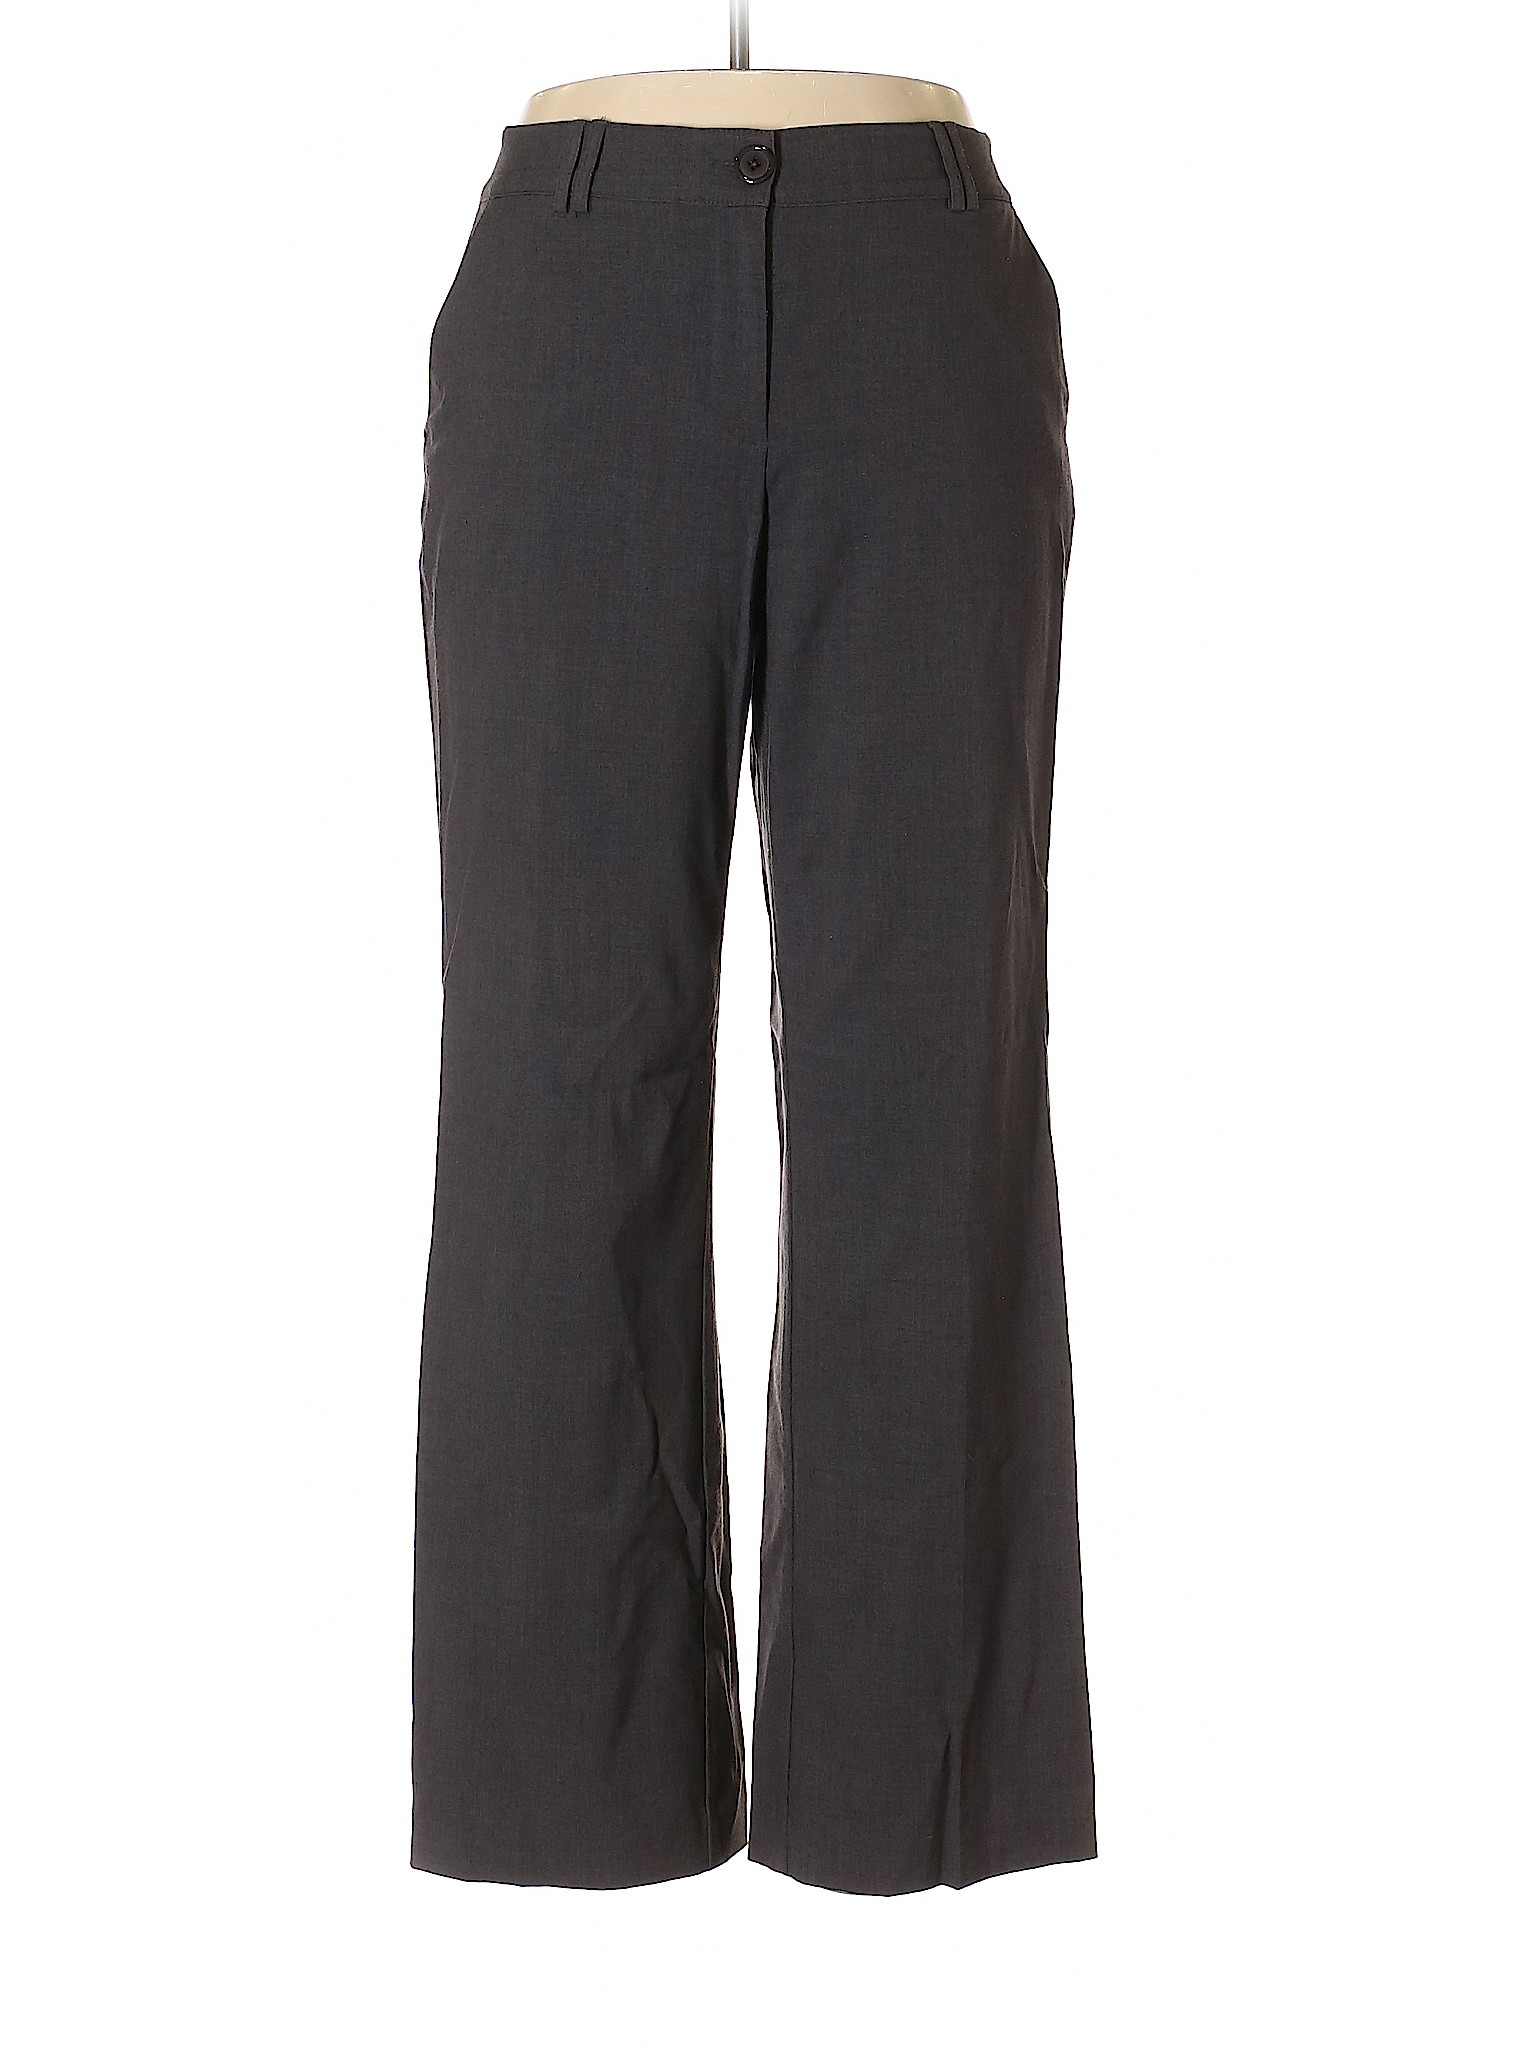 Counterparts Women Gray Dress Pants 12 | eBay